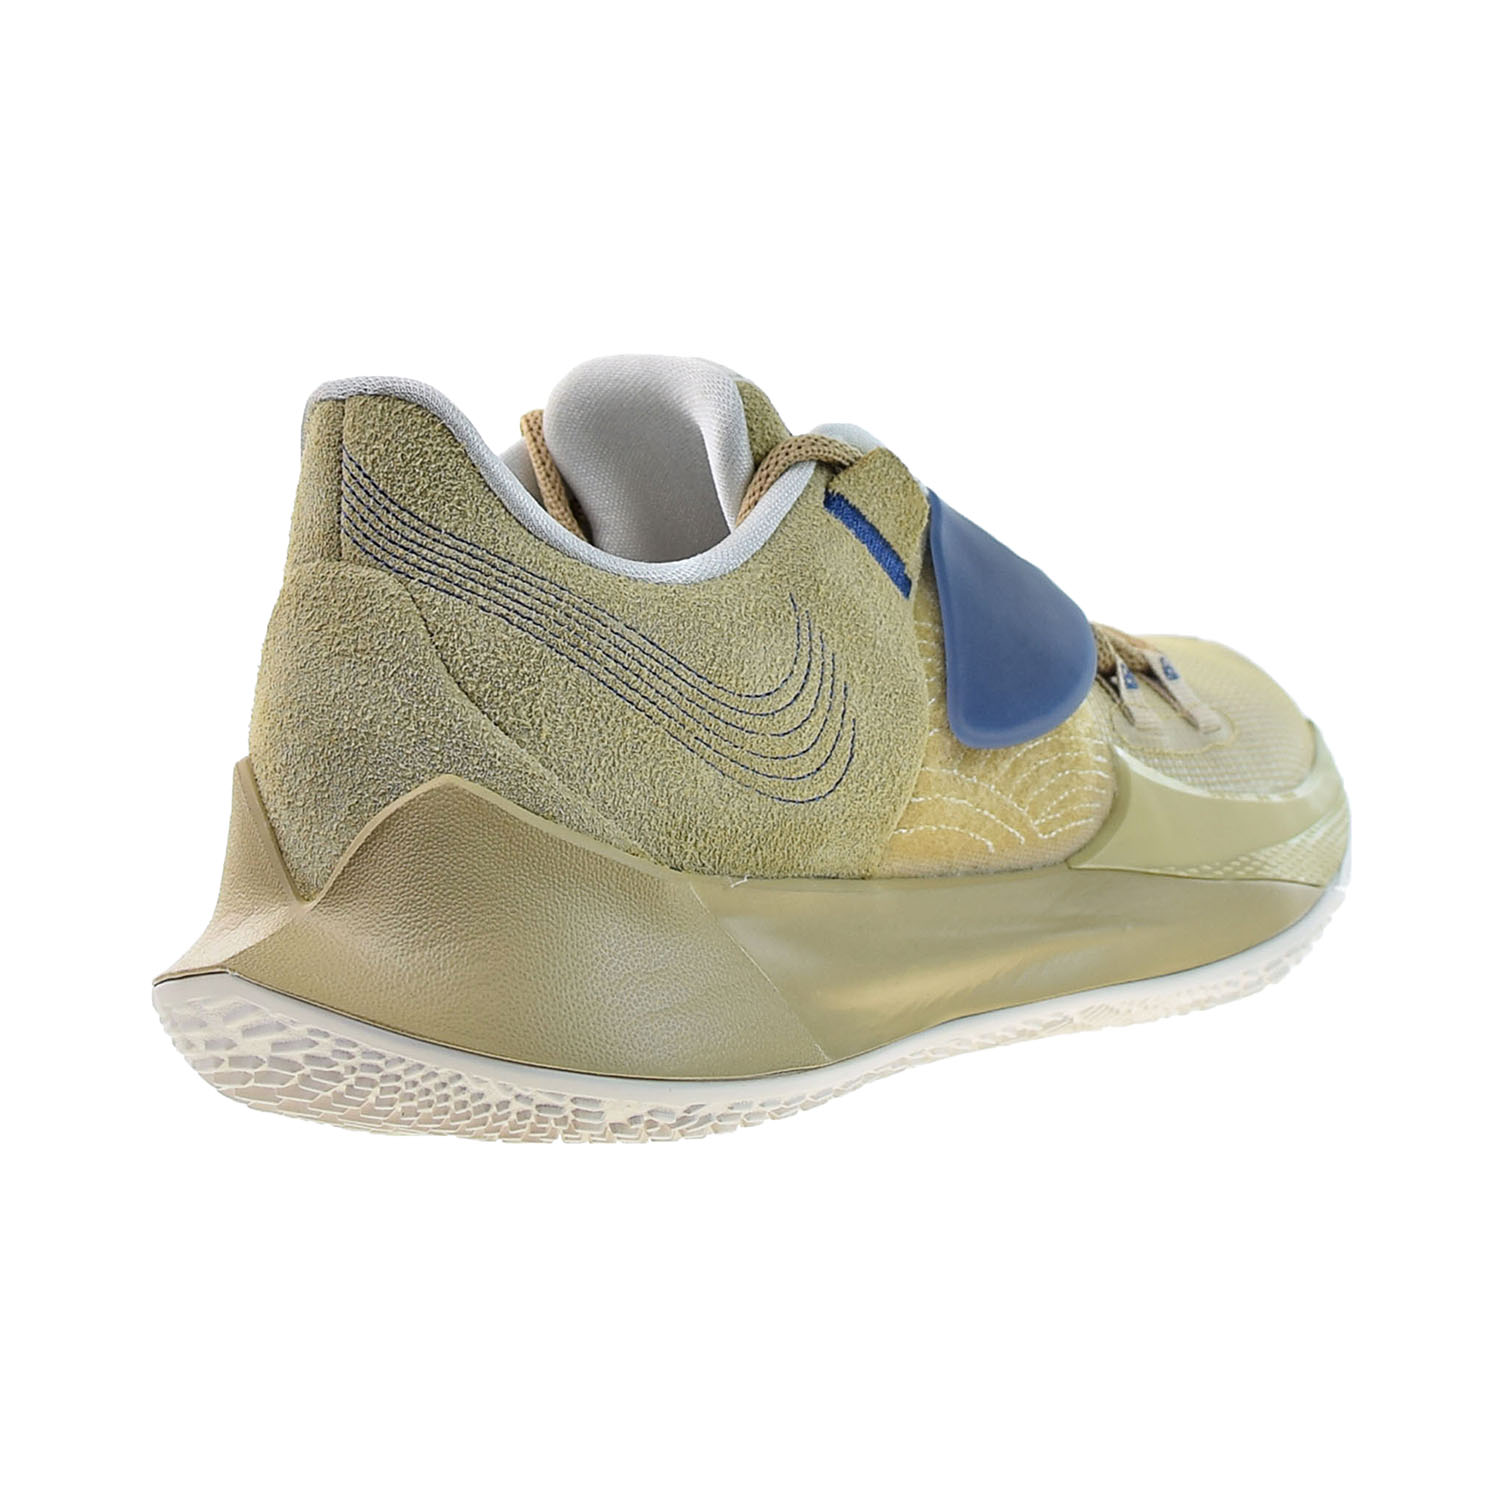 Nike Kyrie Low 3 'Sashiko' Men's Basketball Shoes Sesame-Sail-Mystic Navy da6805-200 - image 3 of 6